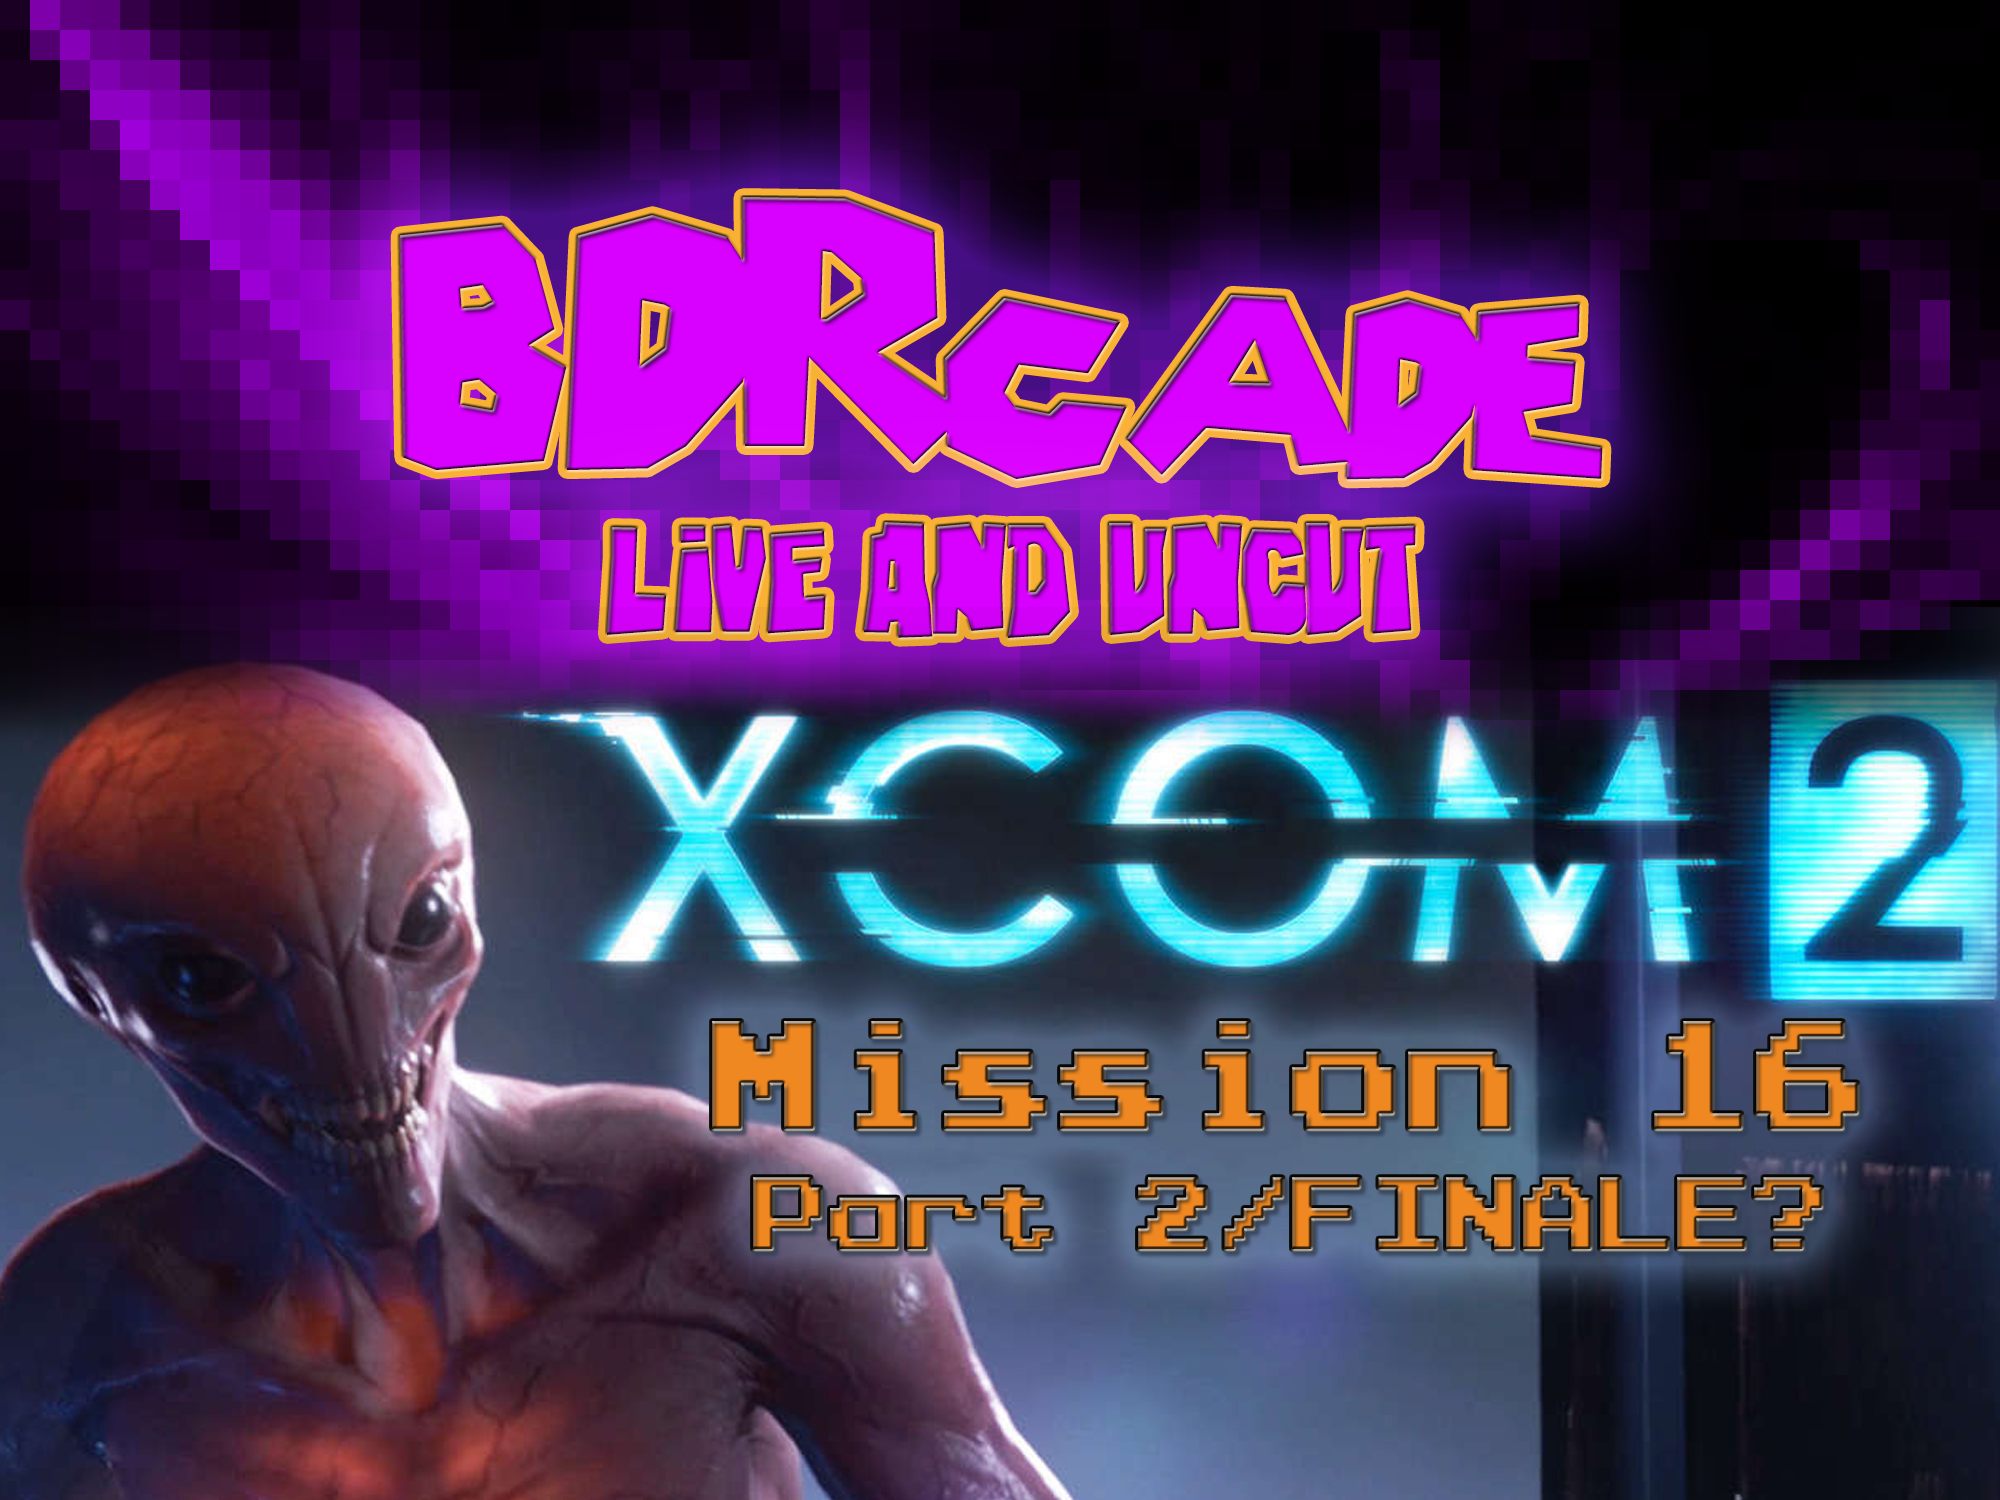 XCOM 2 – Mission 16 Part 2/FINALE? – A BDRcade Live Stream